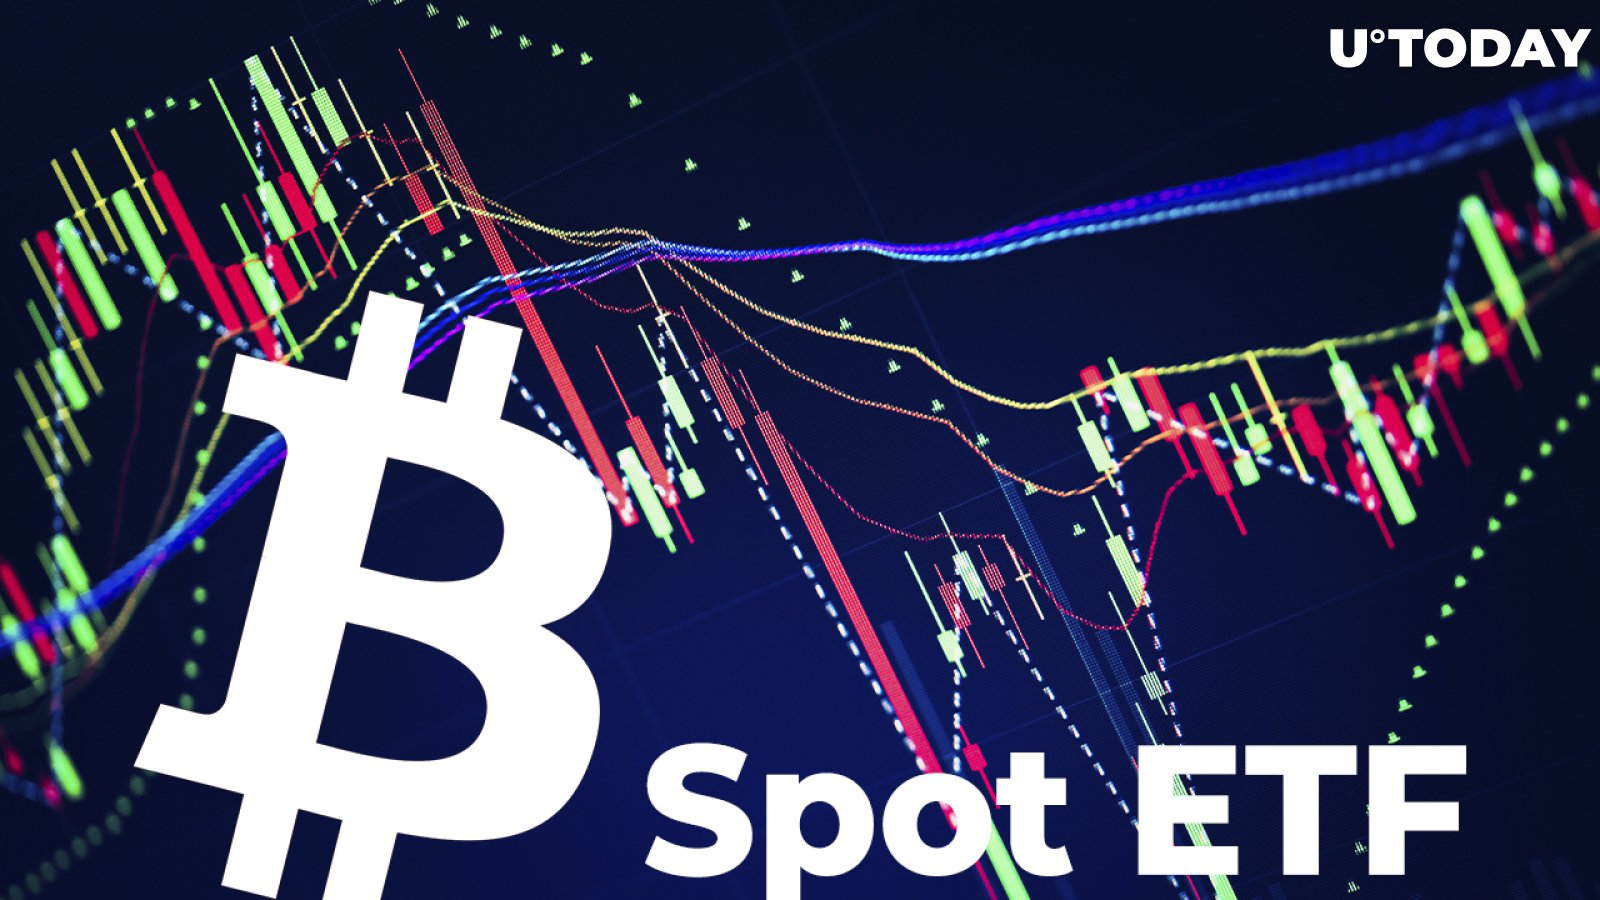 Bitcoin Spot ETF Would Attract Billions USD: Bloomberg Expert